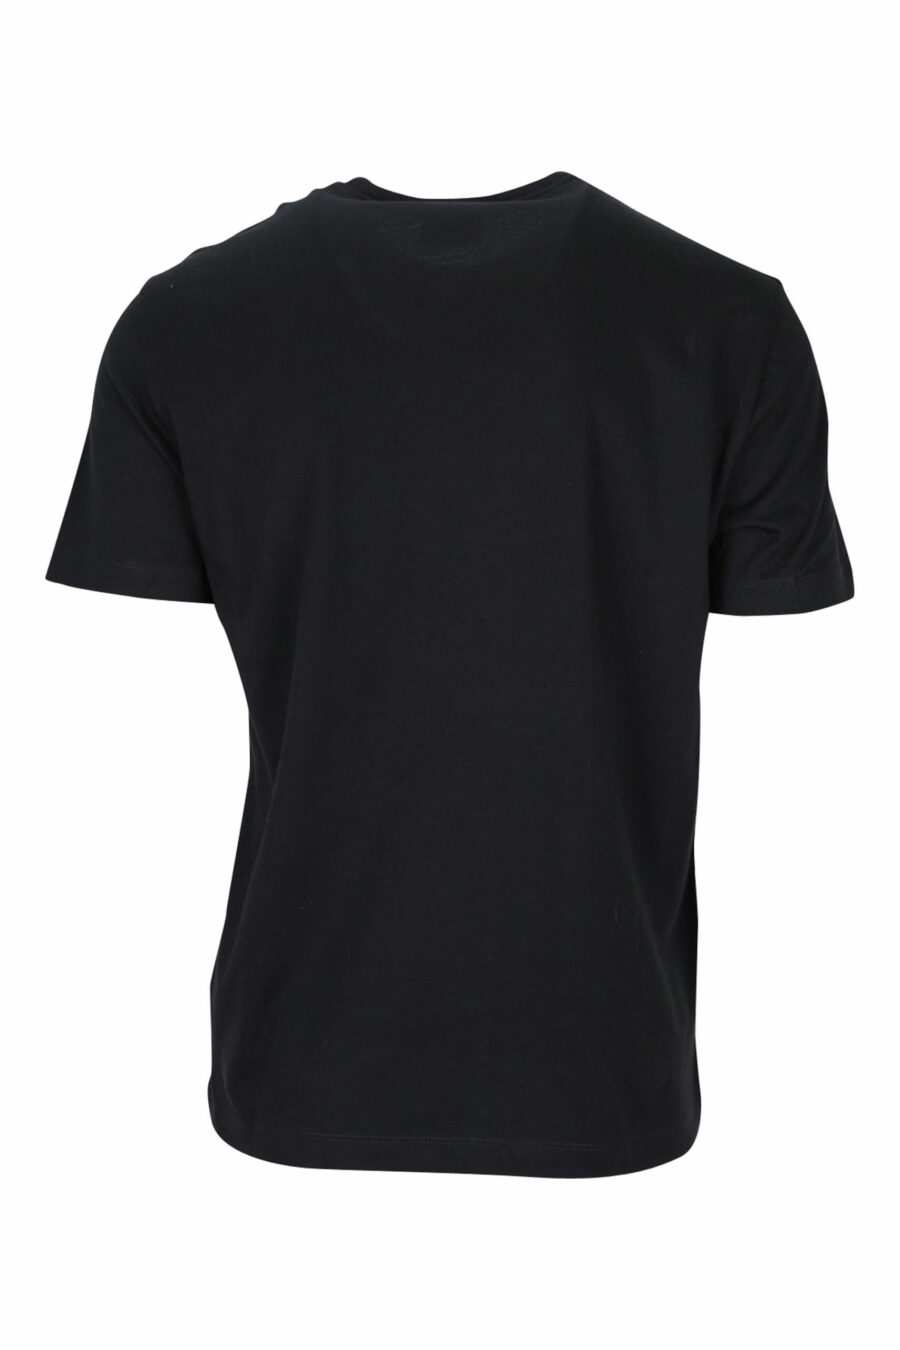 T-shirt preta com maxilogo branco "lux identity" - 8057767688400 1 à escala